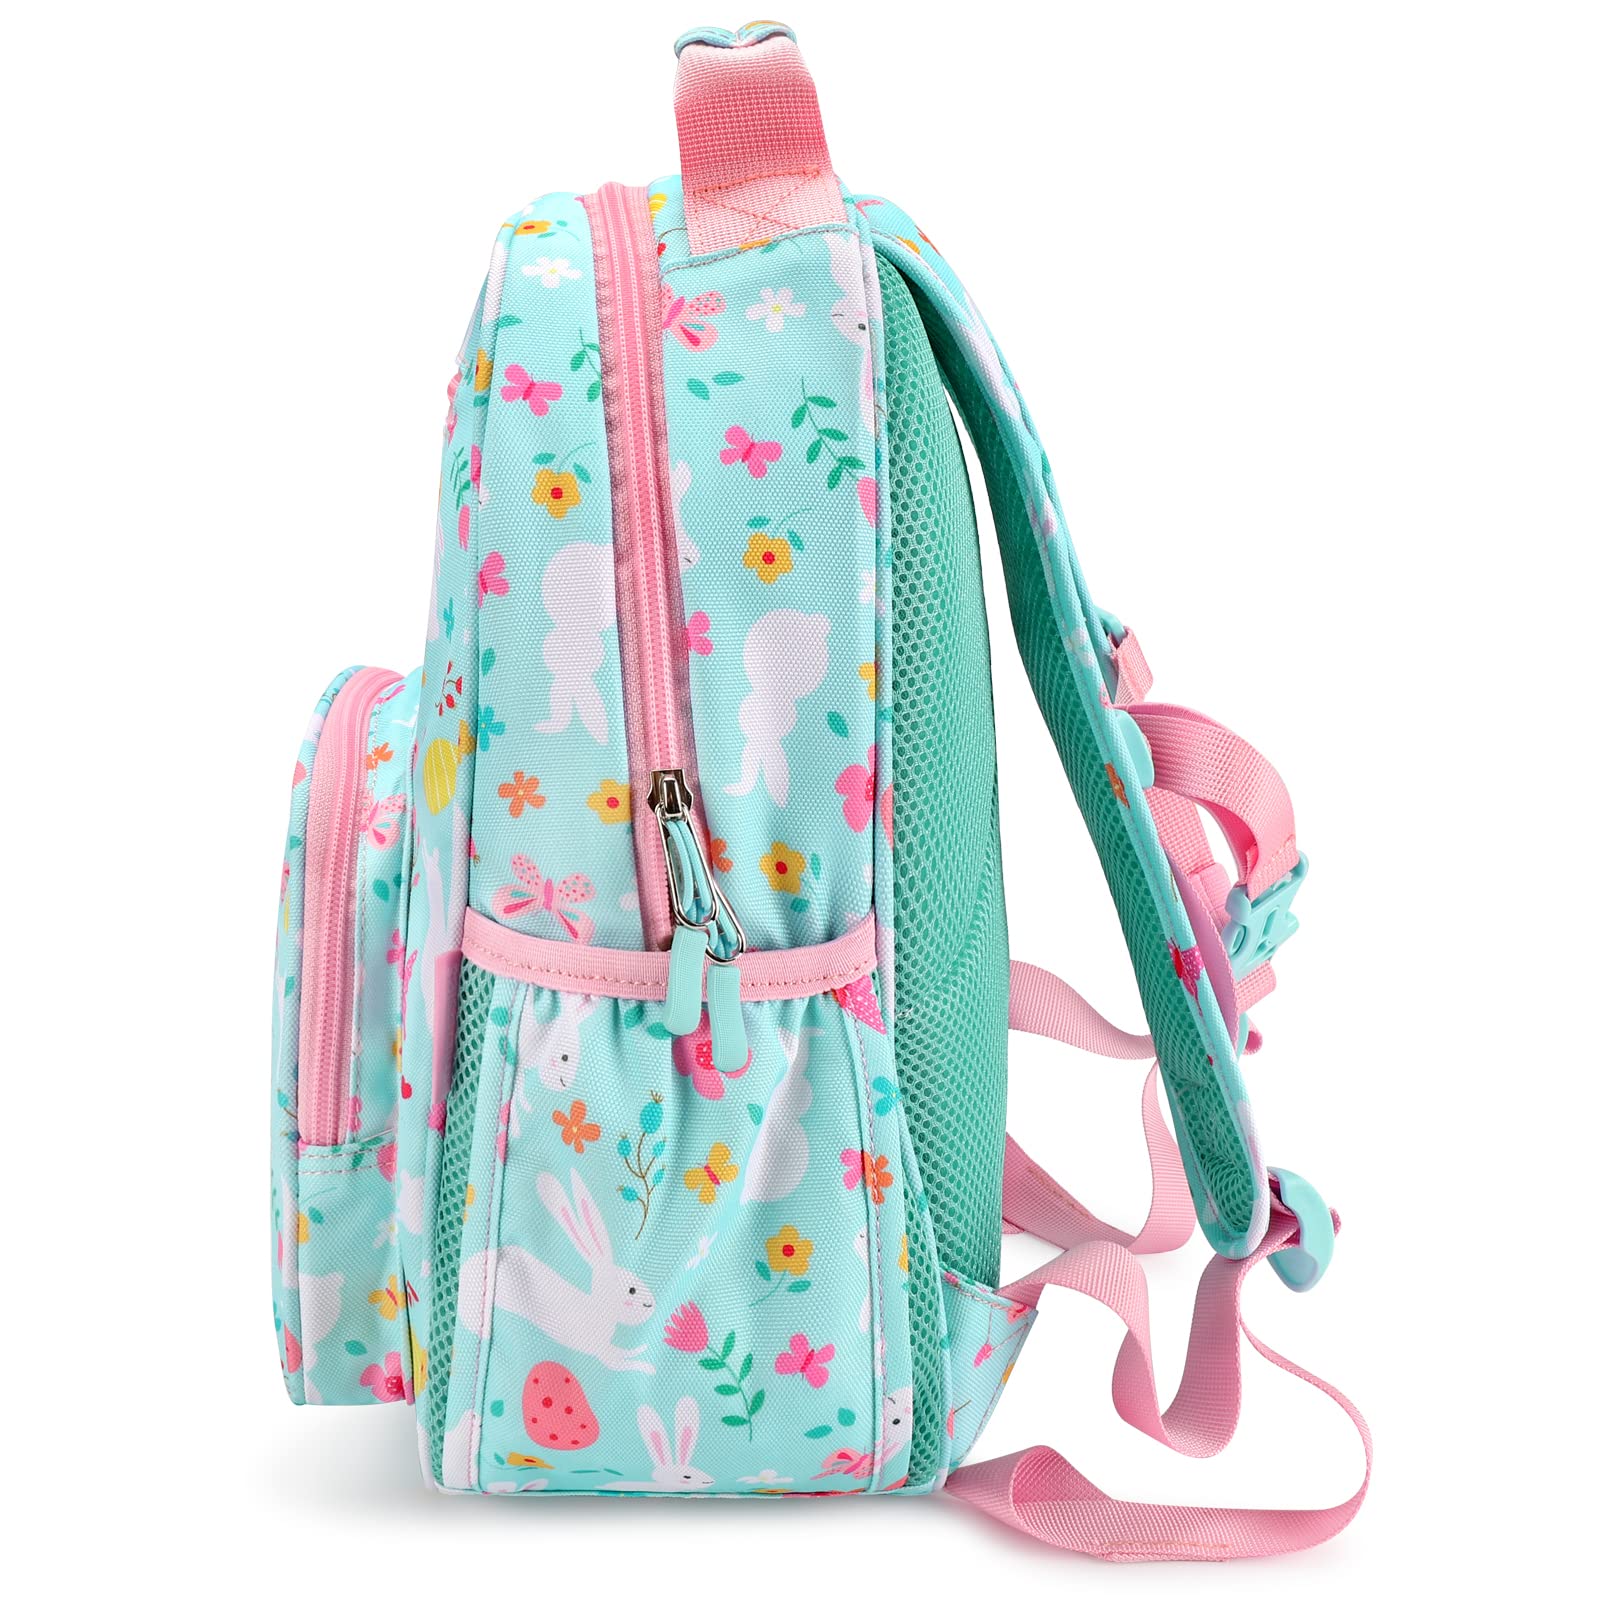 FUN FOR SPRING schoolbag Mibasies 